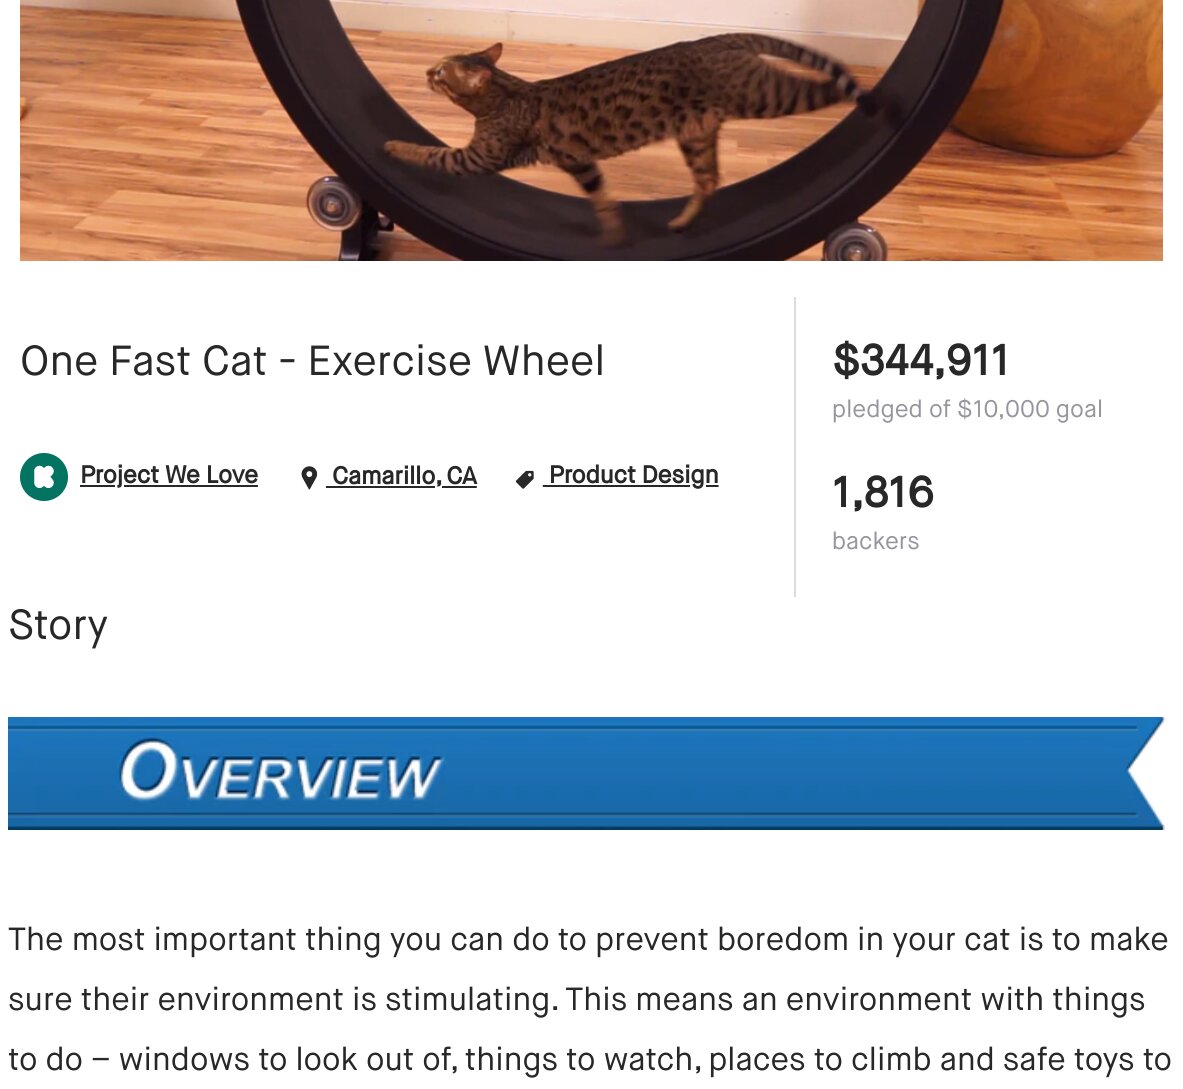 One Fast Cat Beat It's Goal On Kickstarter